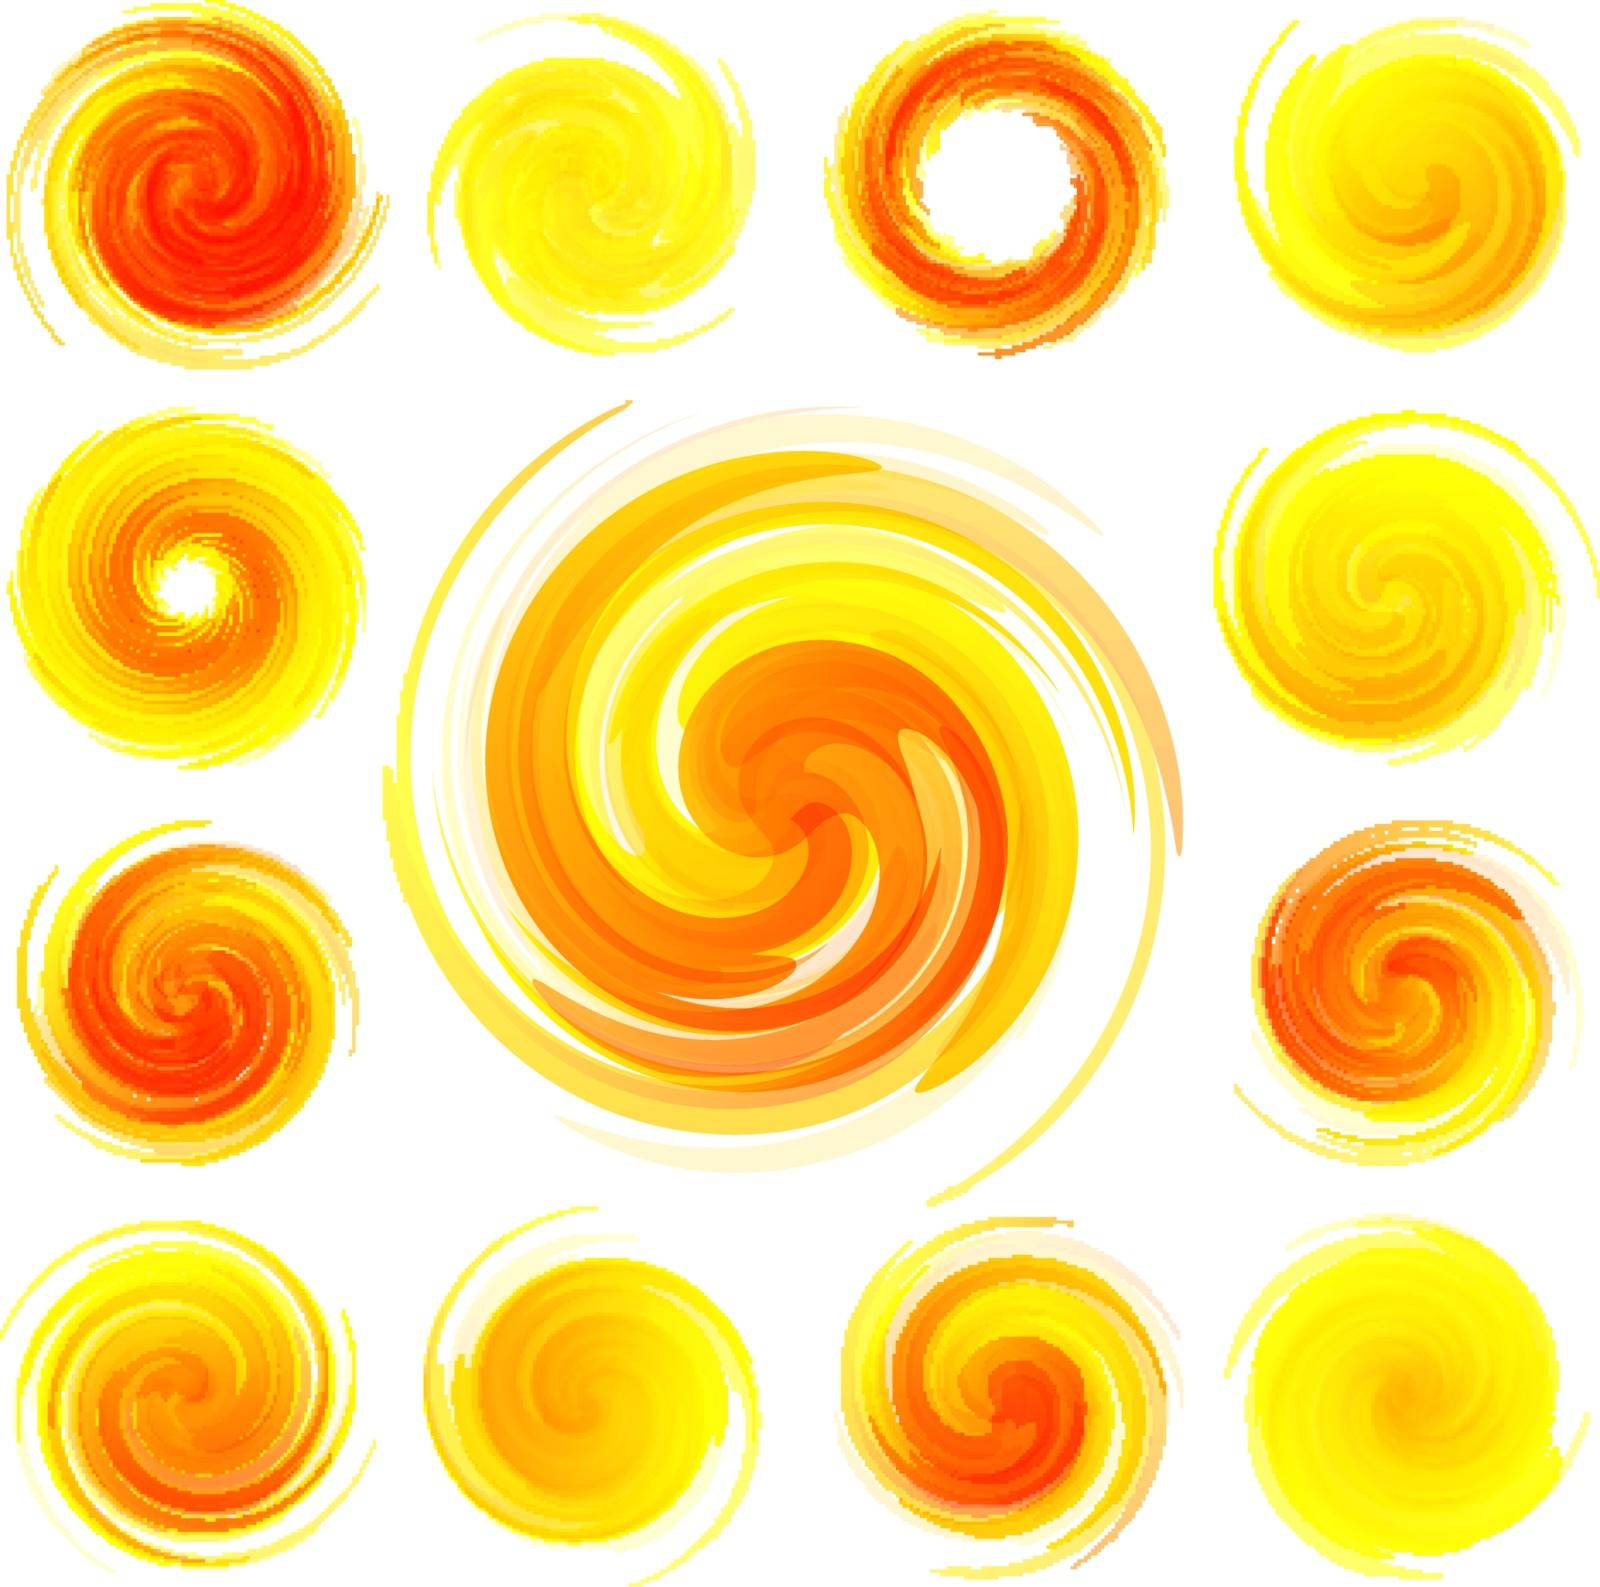 Sunny swirl elements by login